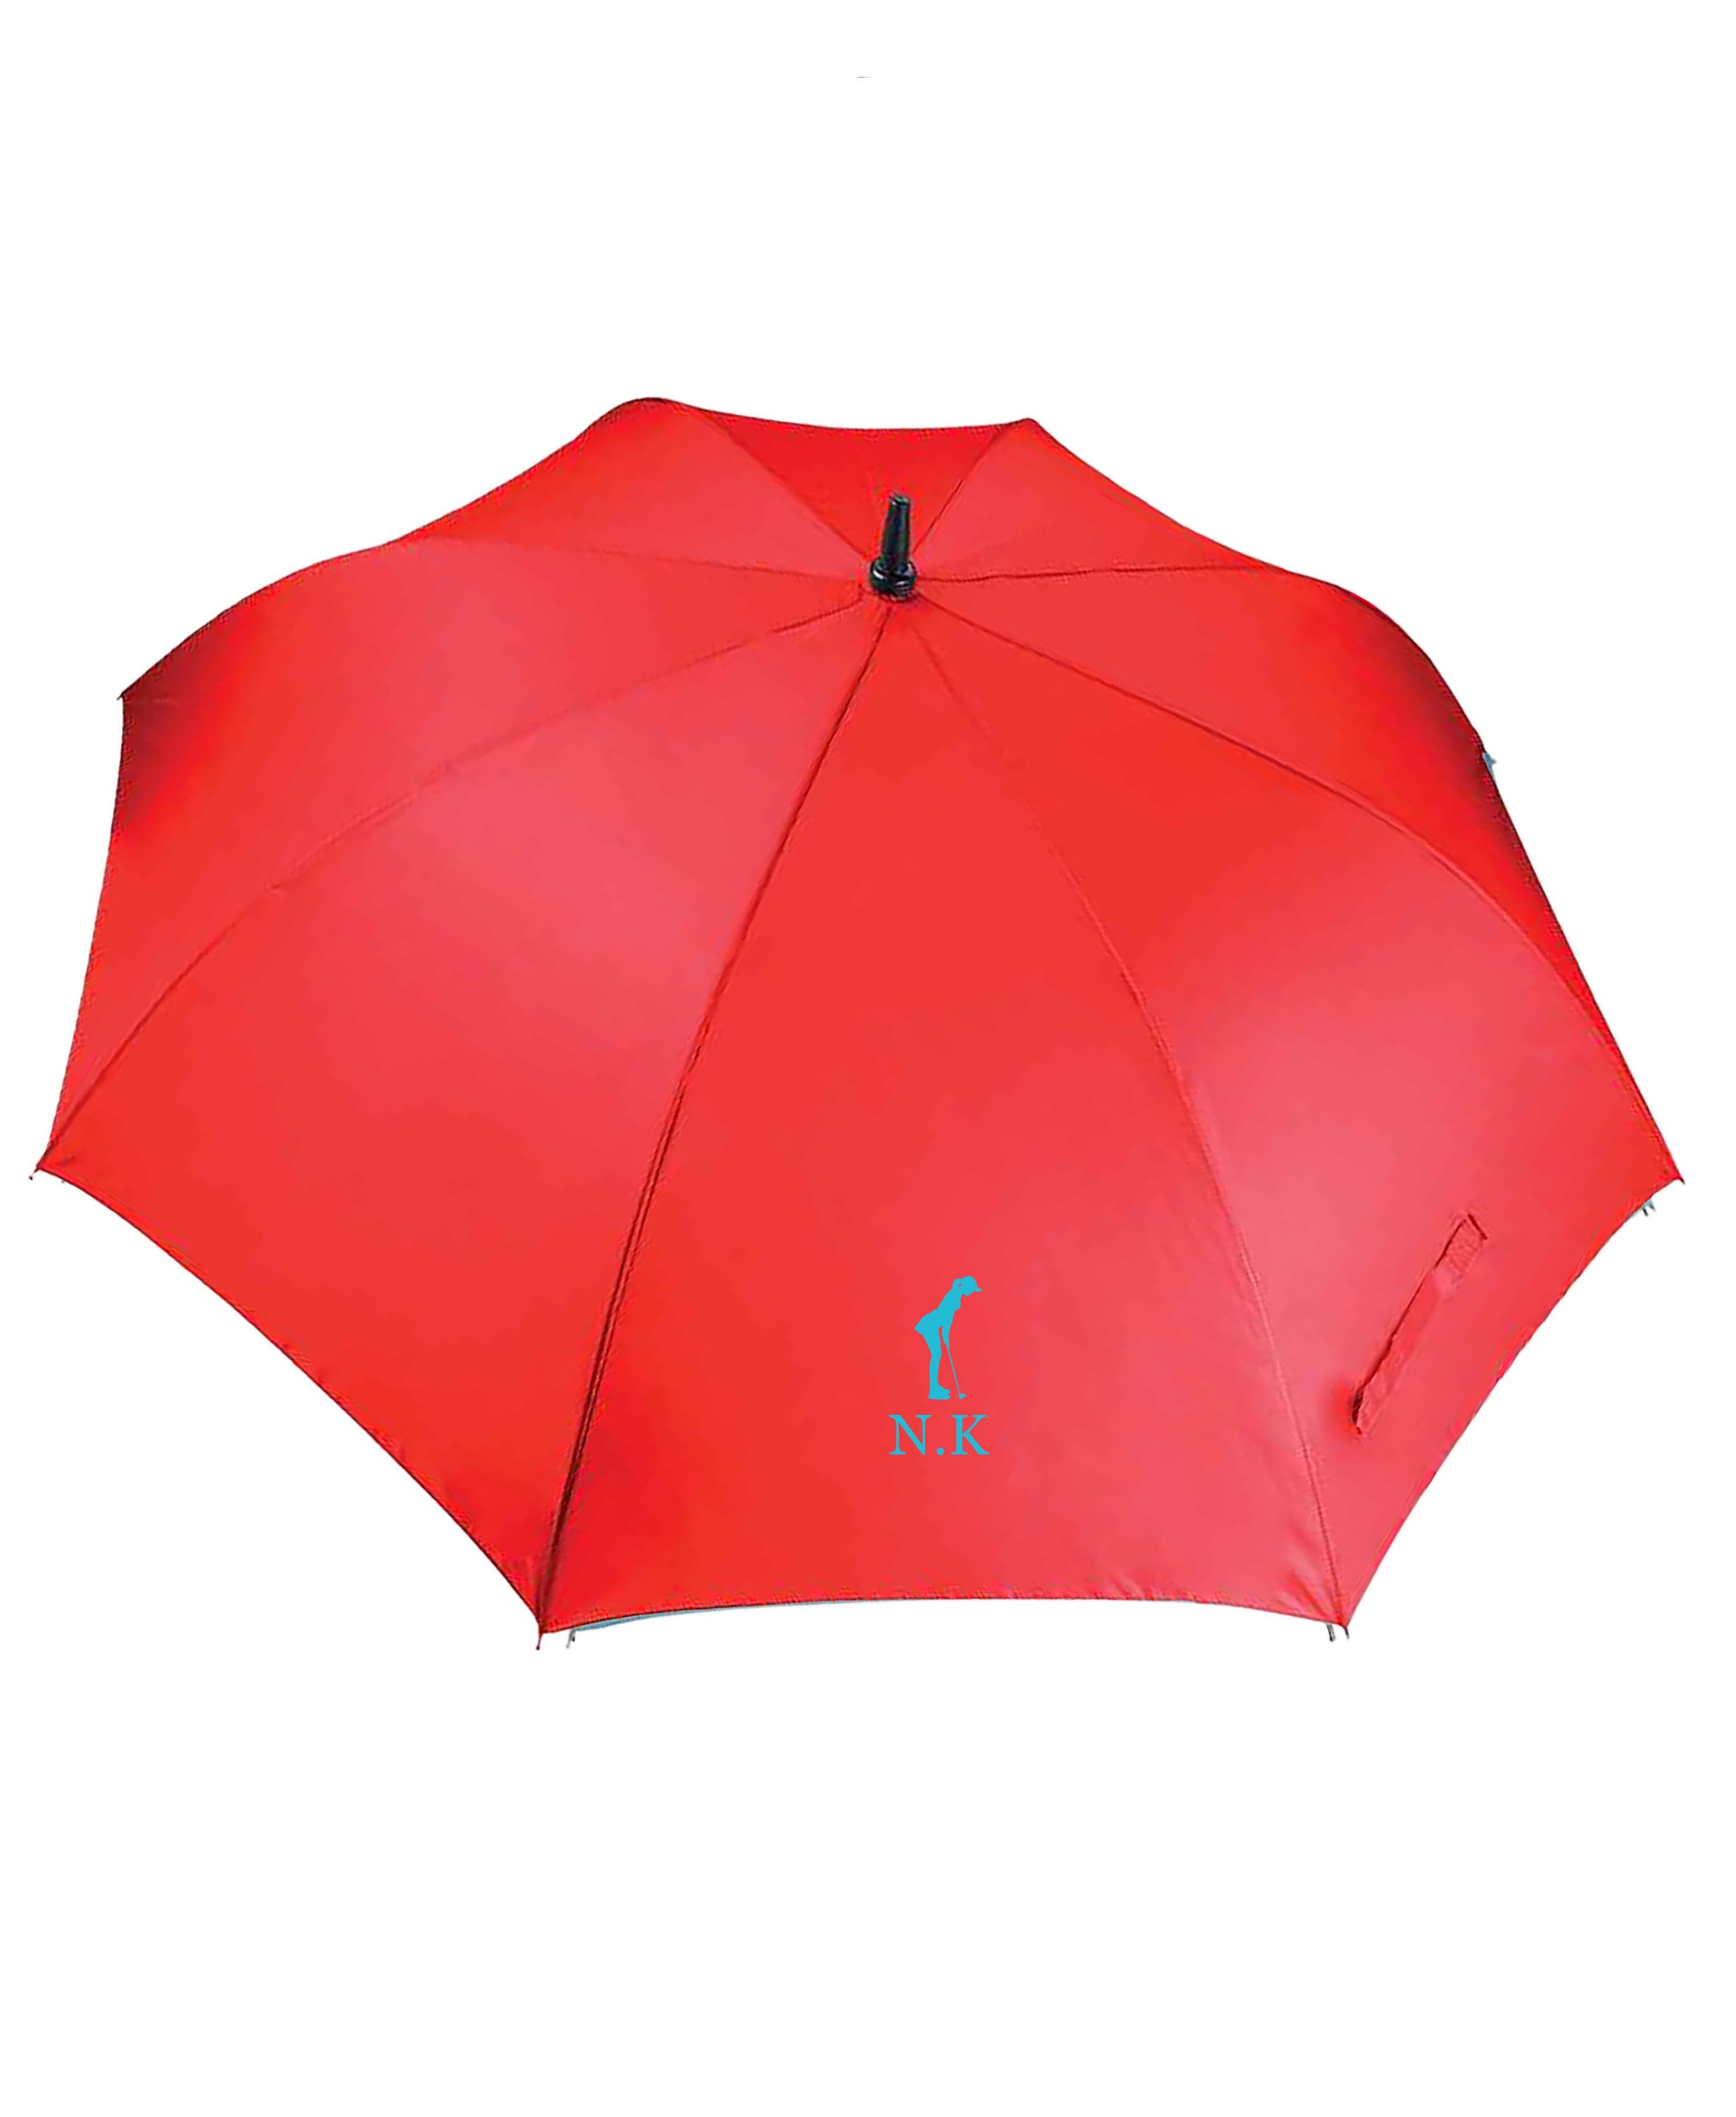 Women's X-Large Golf Umbrella Red